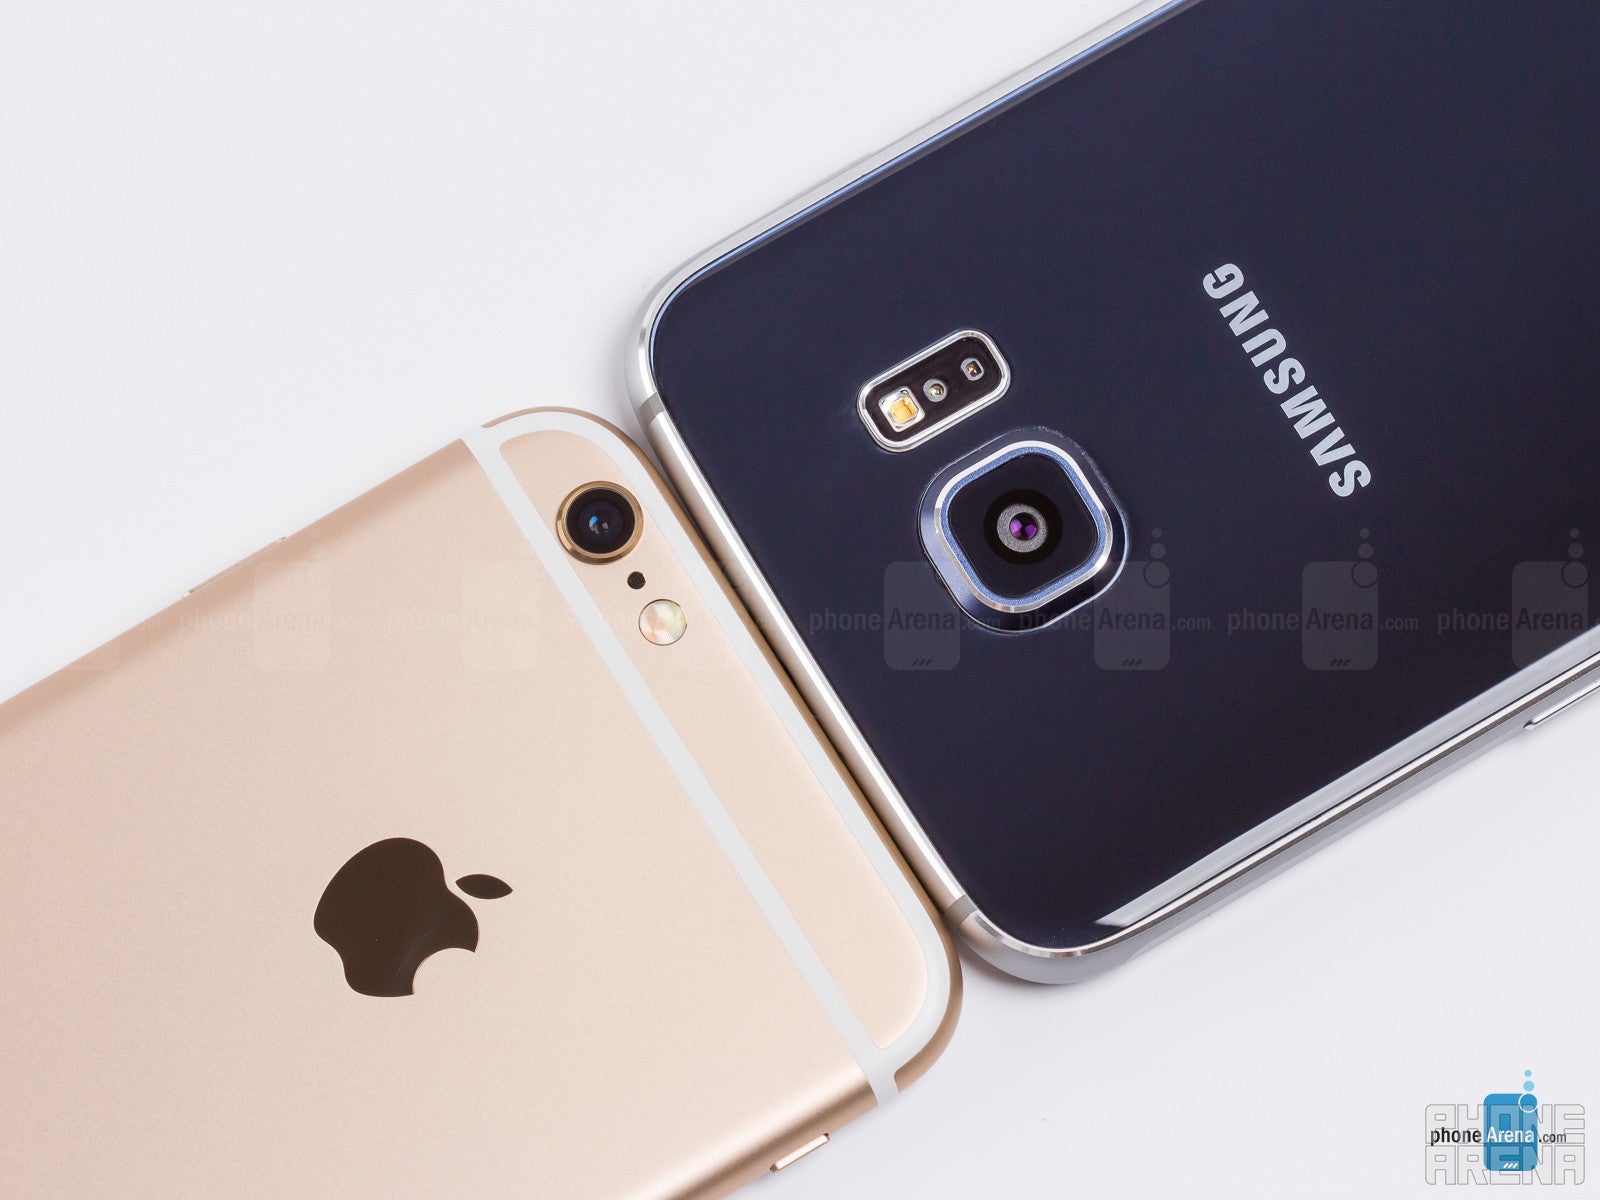 Apple iPhone 6s vs Samsung Galaxy S6